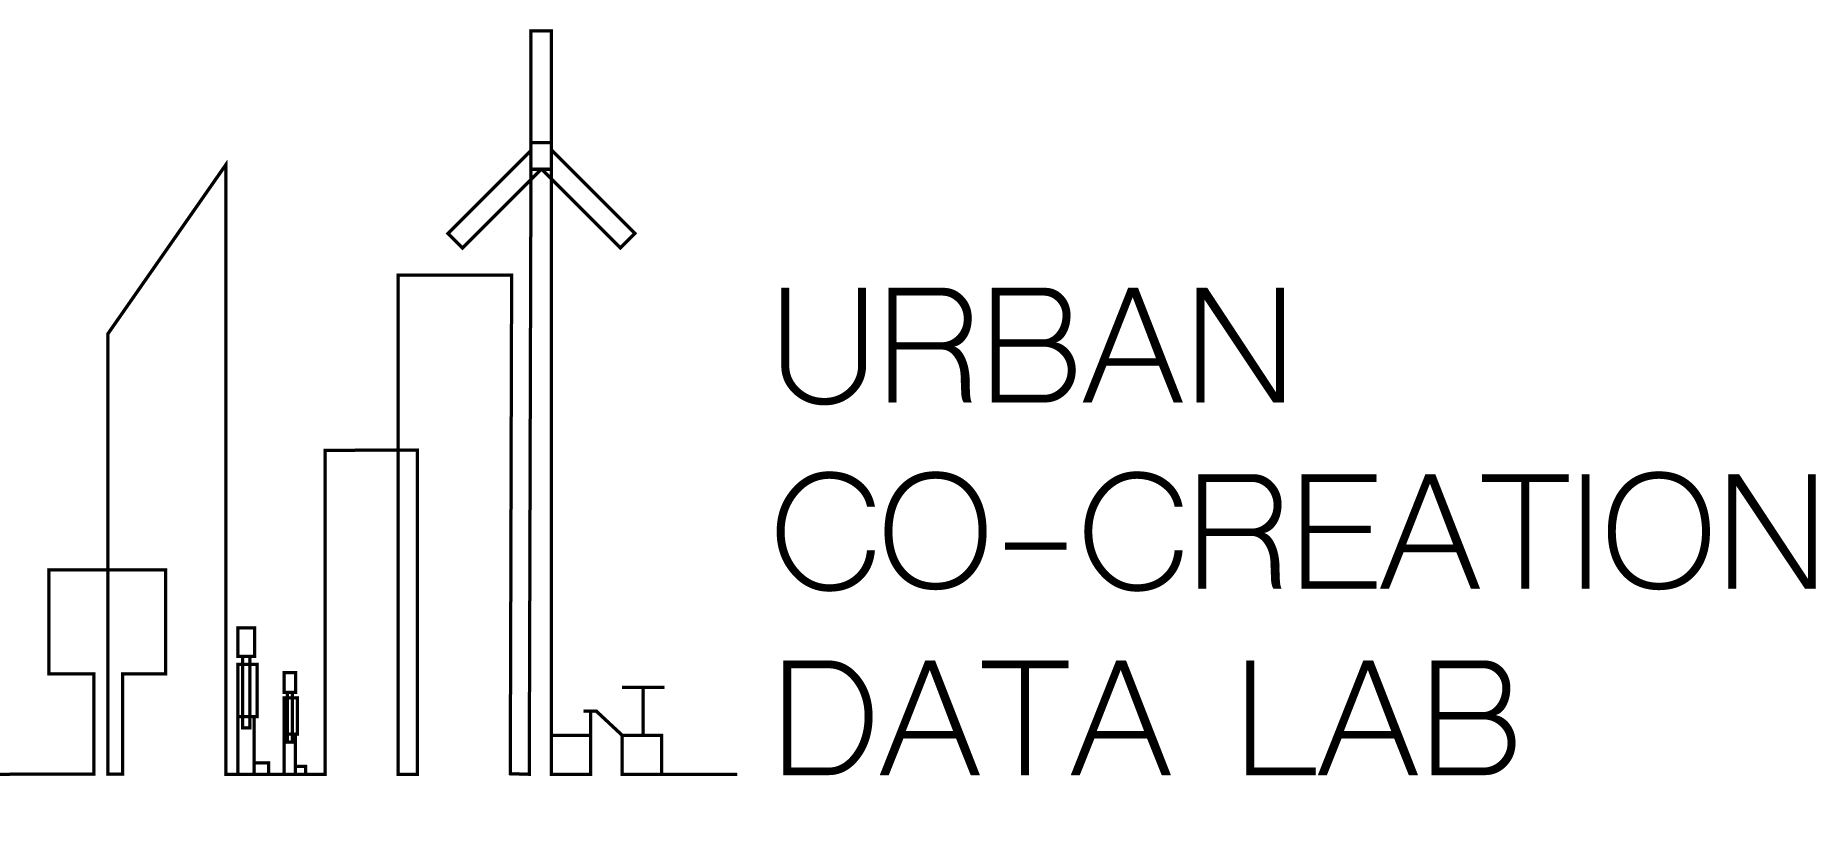 Urban Co-Creation Data Lab